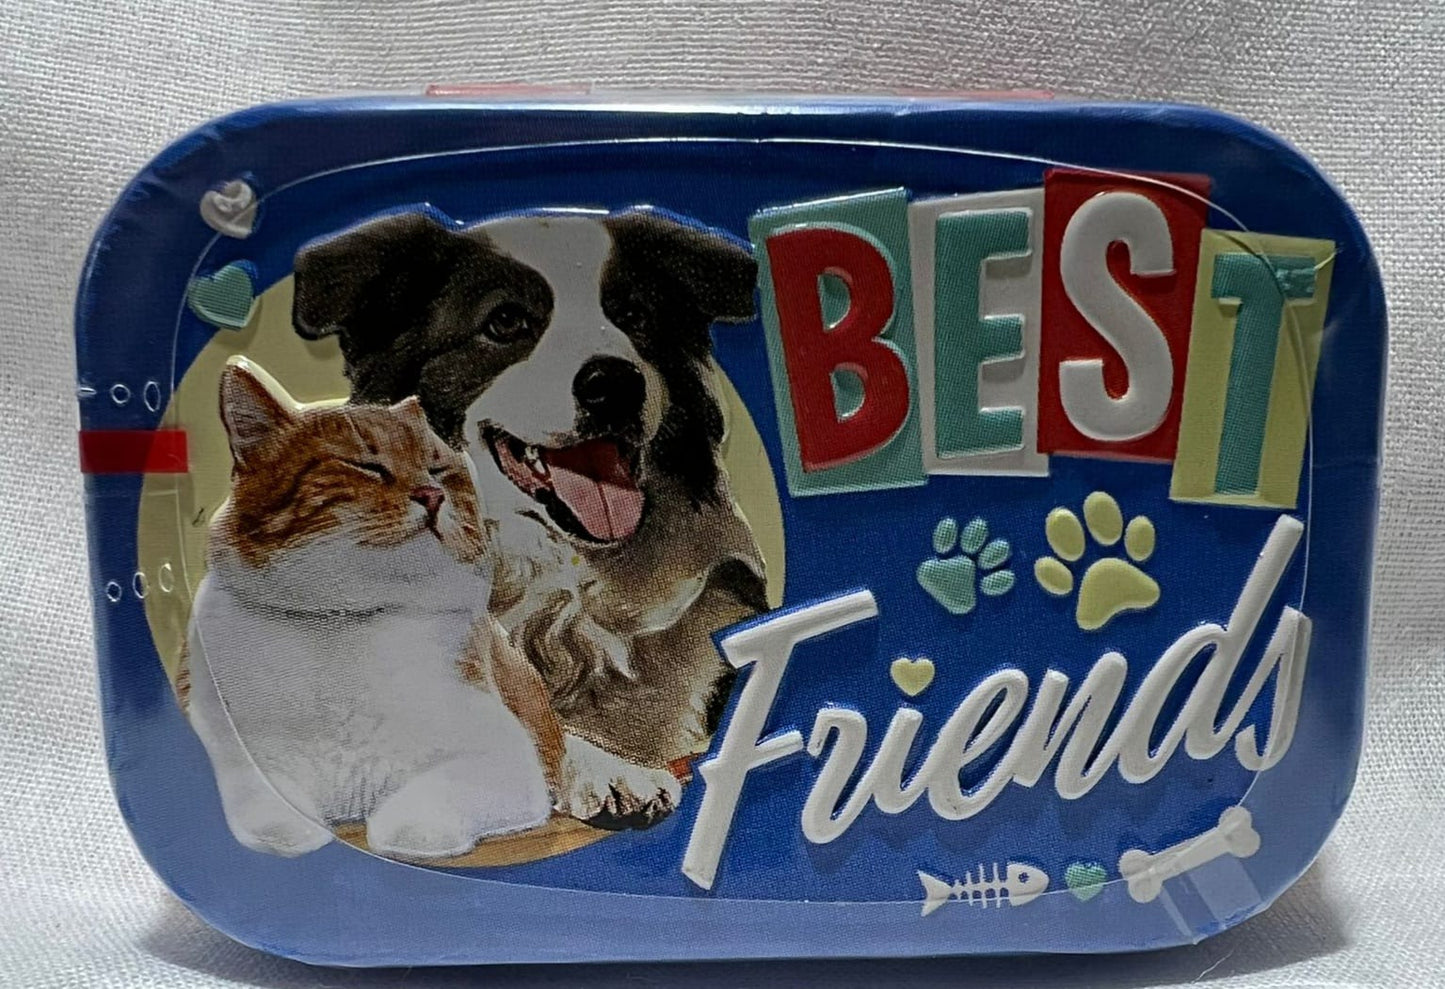 Blechdose "Best Friends" gefüllt mit Pfefferminzdragees